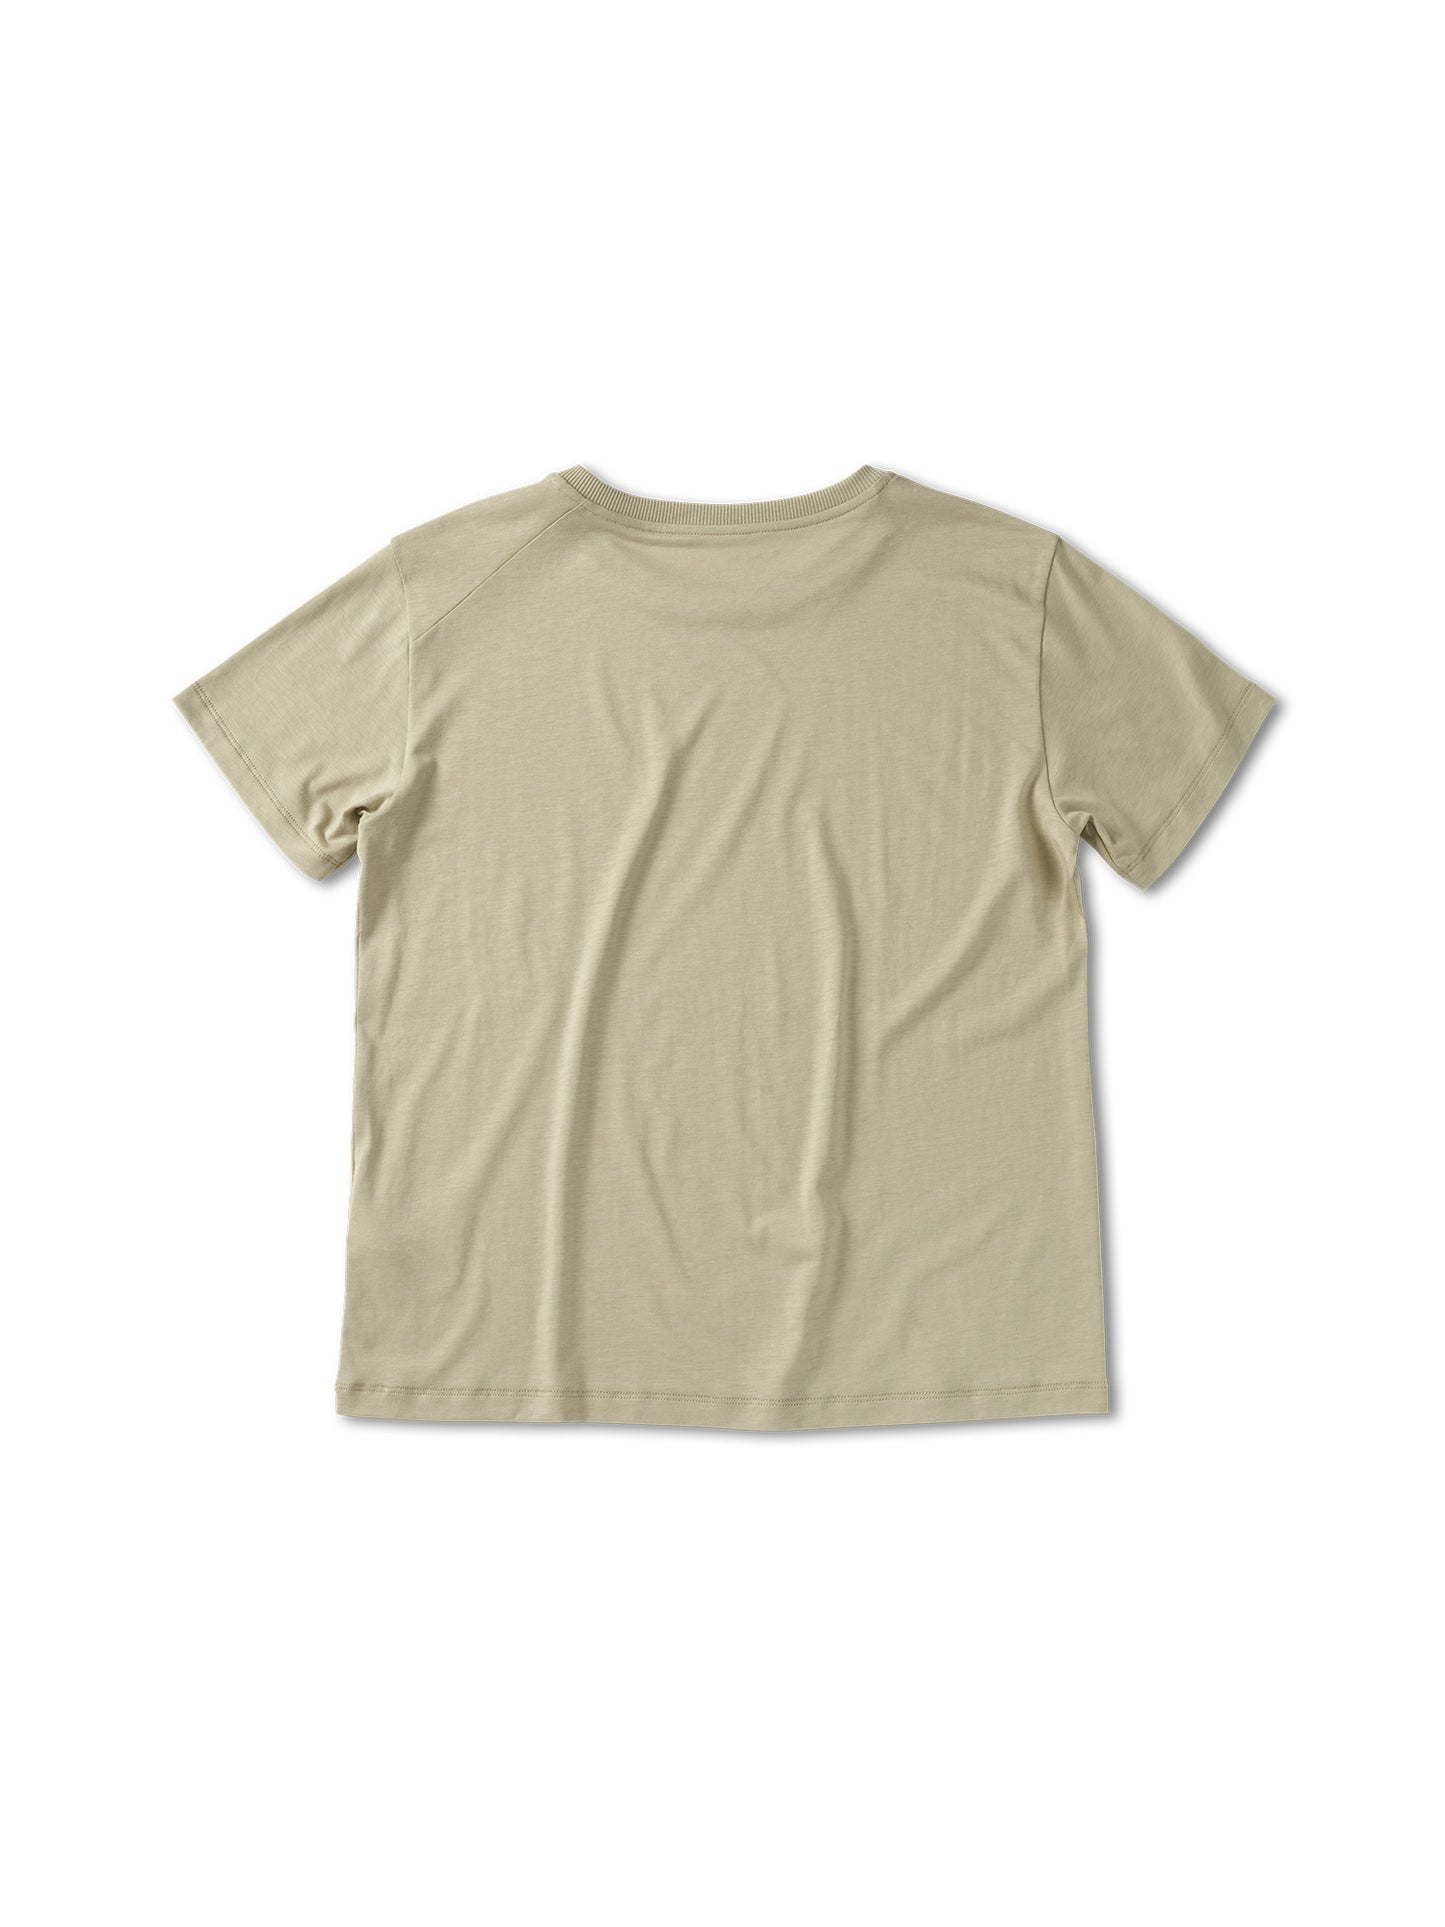 pinqponq-Tshirt-Tencel-Cotton-Women-Tone-Wooden-Olive-back